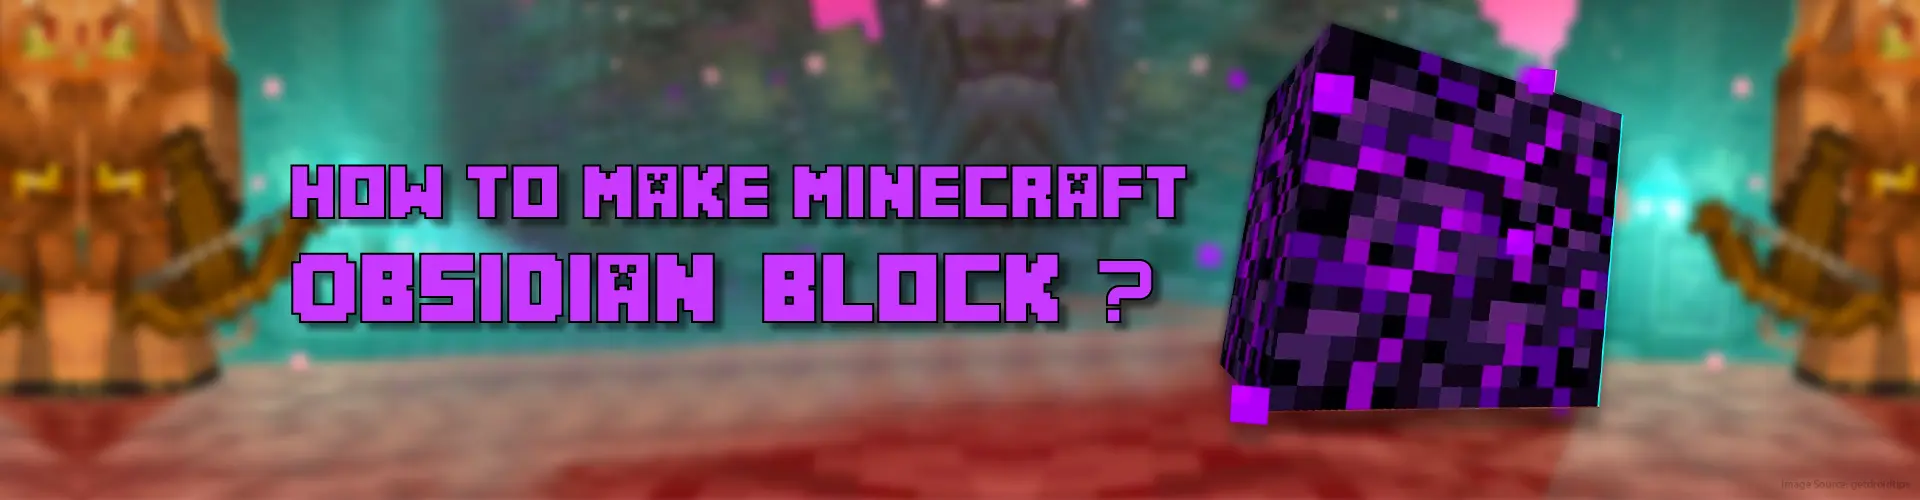 make minecraft obsidian block